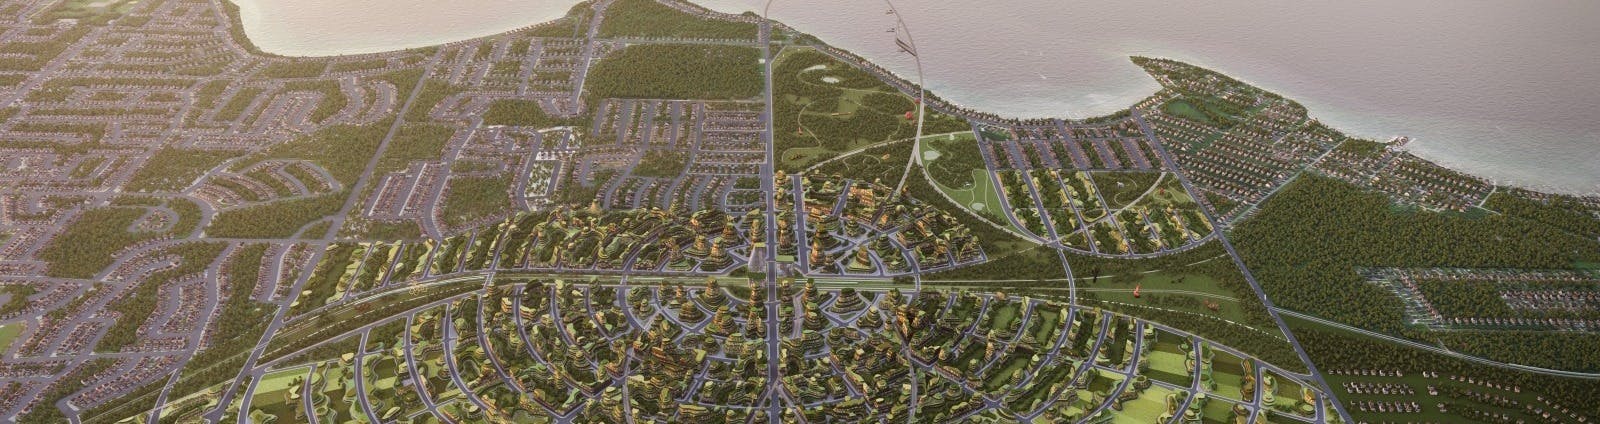 Aerial view of futuristic city amongst lake and farmland